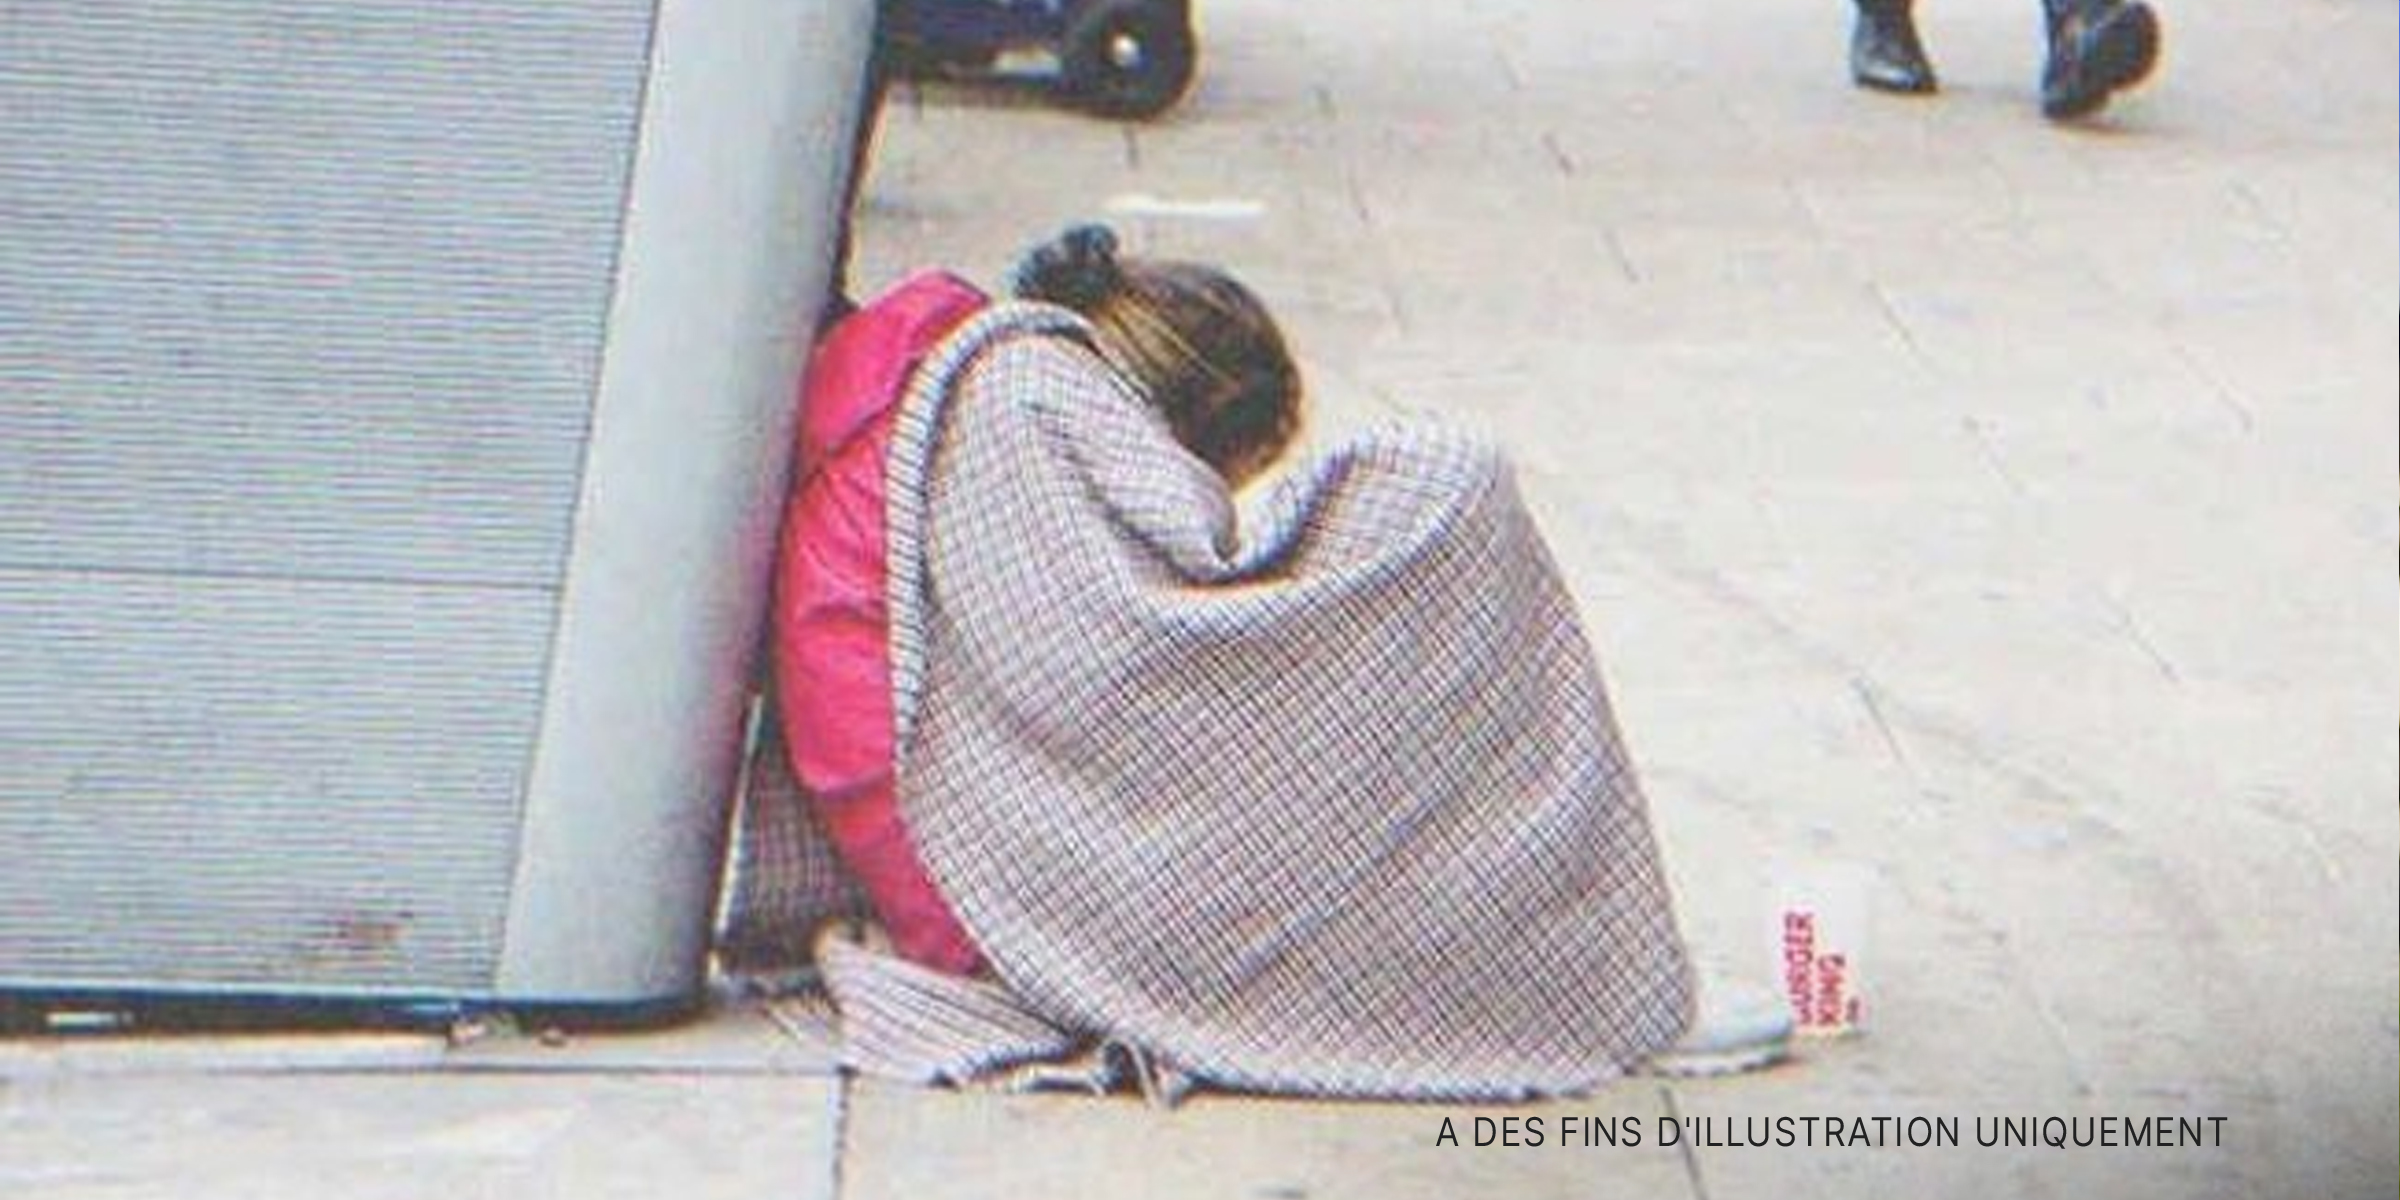 Femme mendiant assise dans la rue | Source : Shutterstock